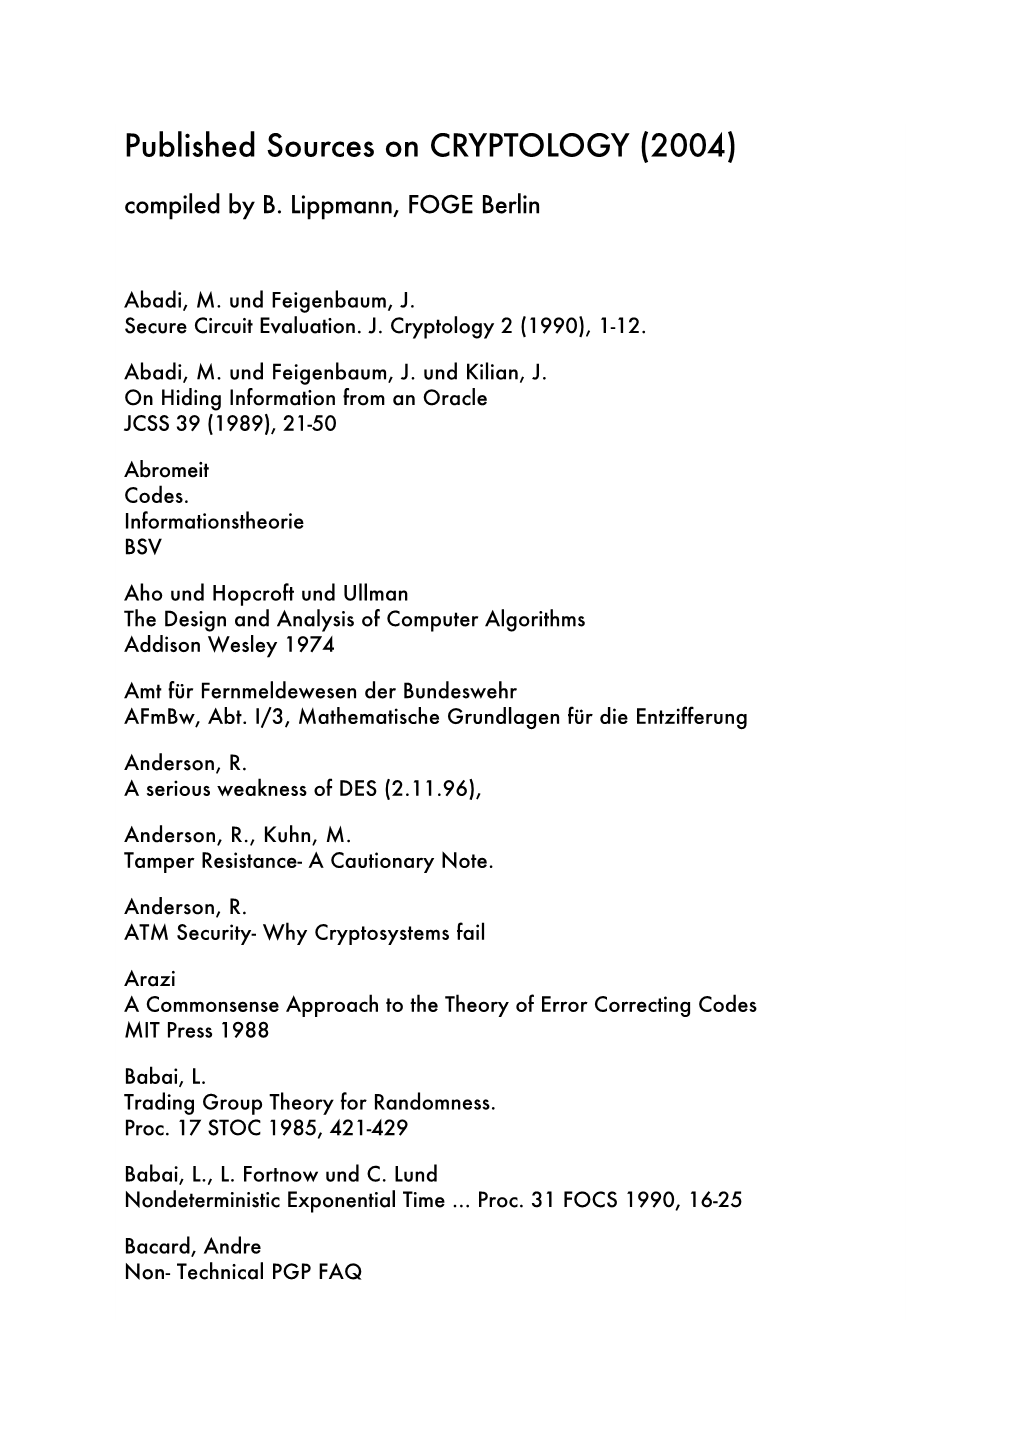 Published Sources on Cryptology 2004